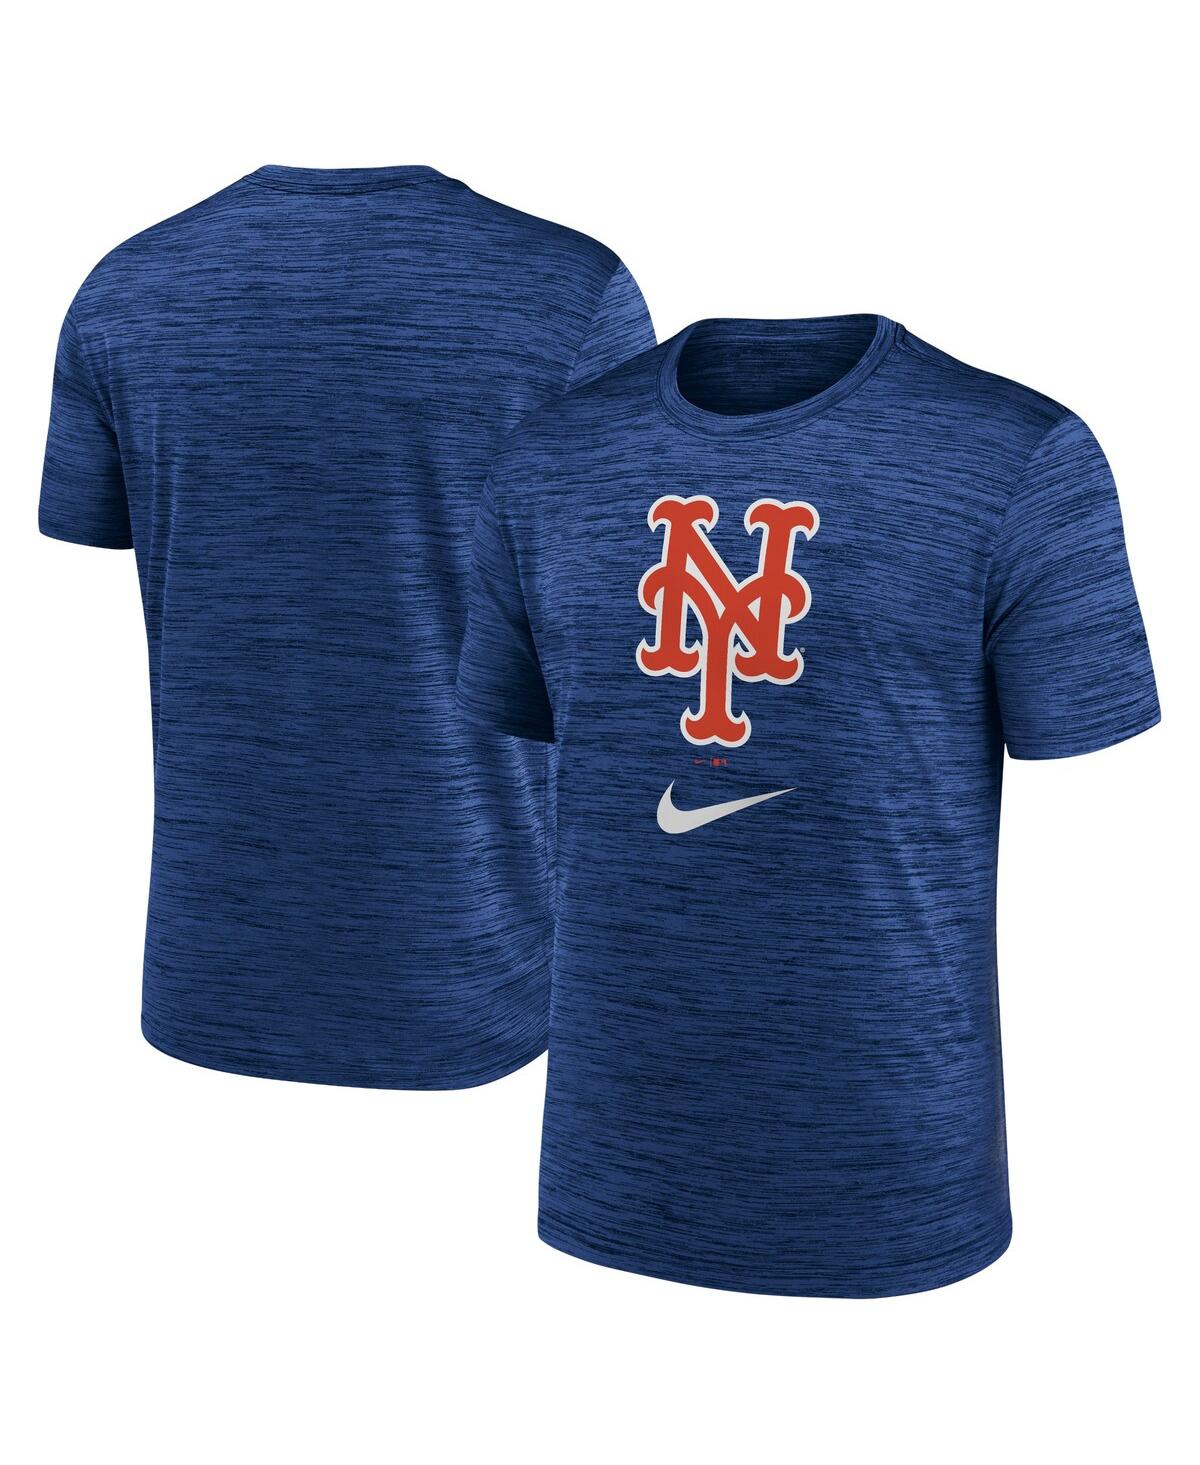 Nike Men's Nike Royal New York Mets Logo Velocity Performance T ...